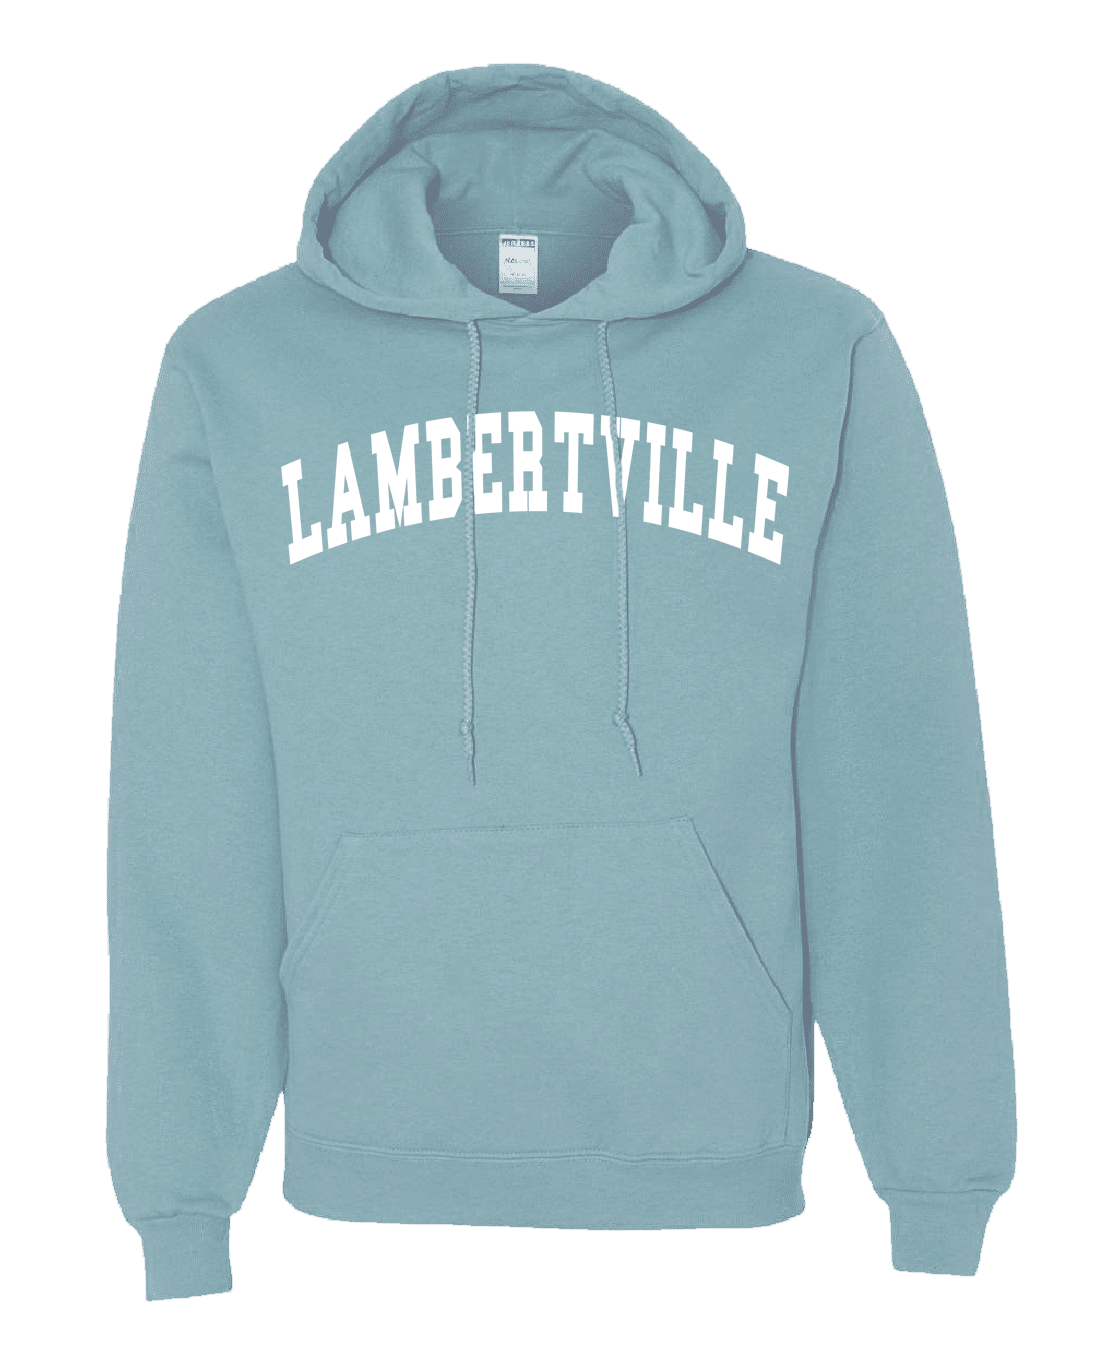 "Lambertville" Arc Hooded Sweatshirt